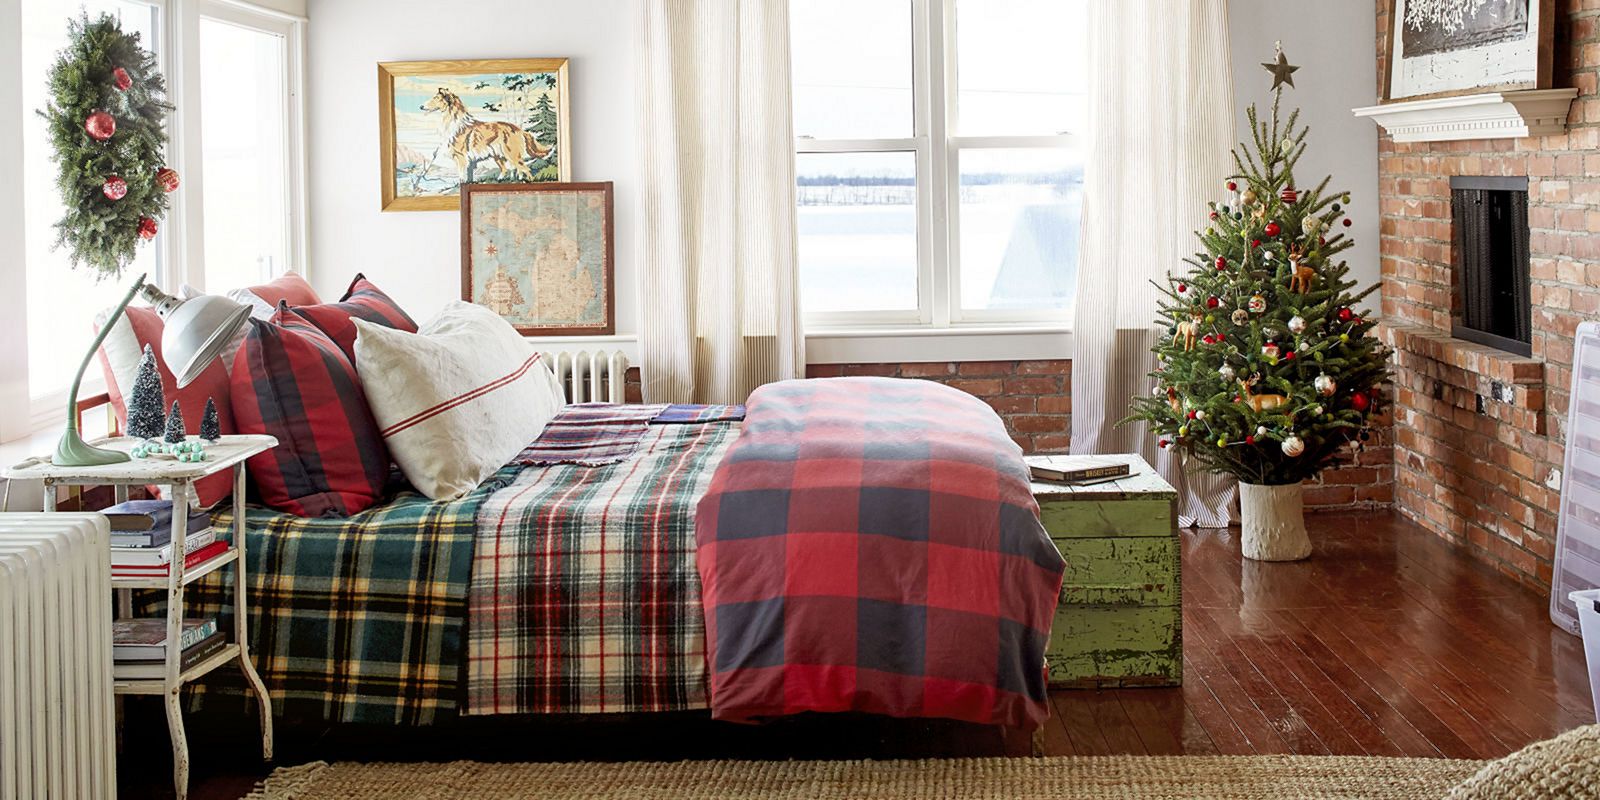 Best Christmas Bedroom Design Ideas